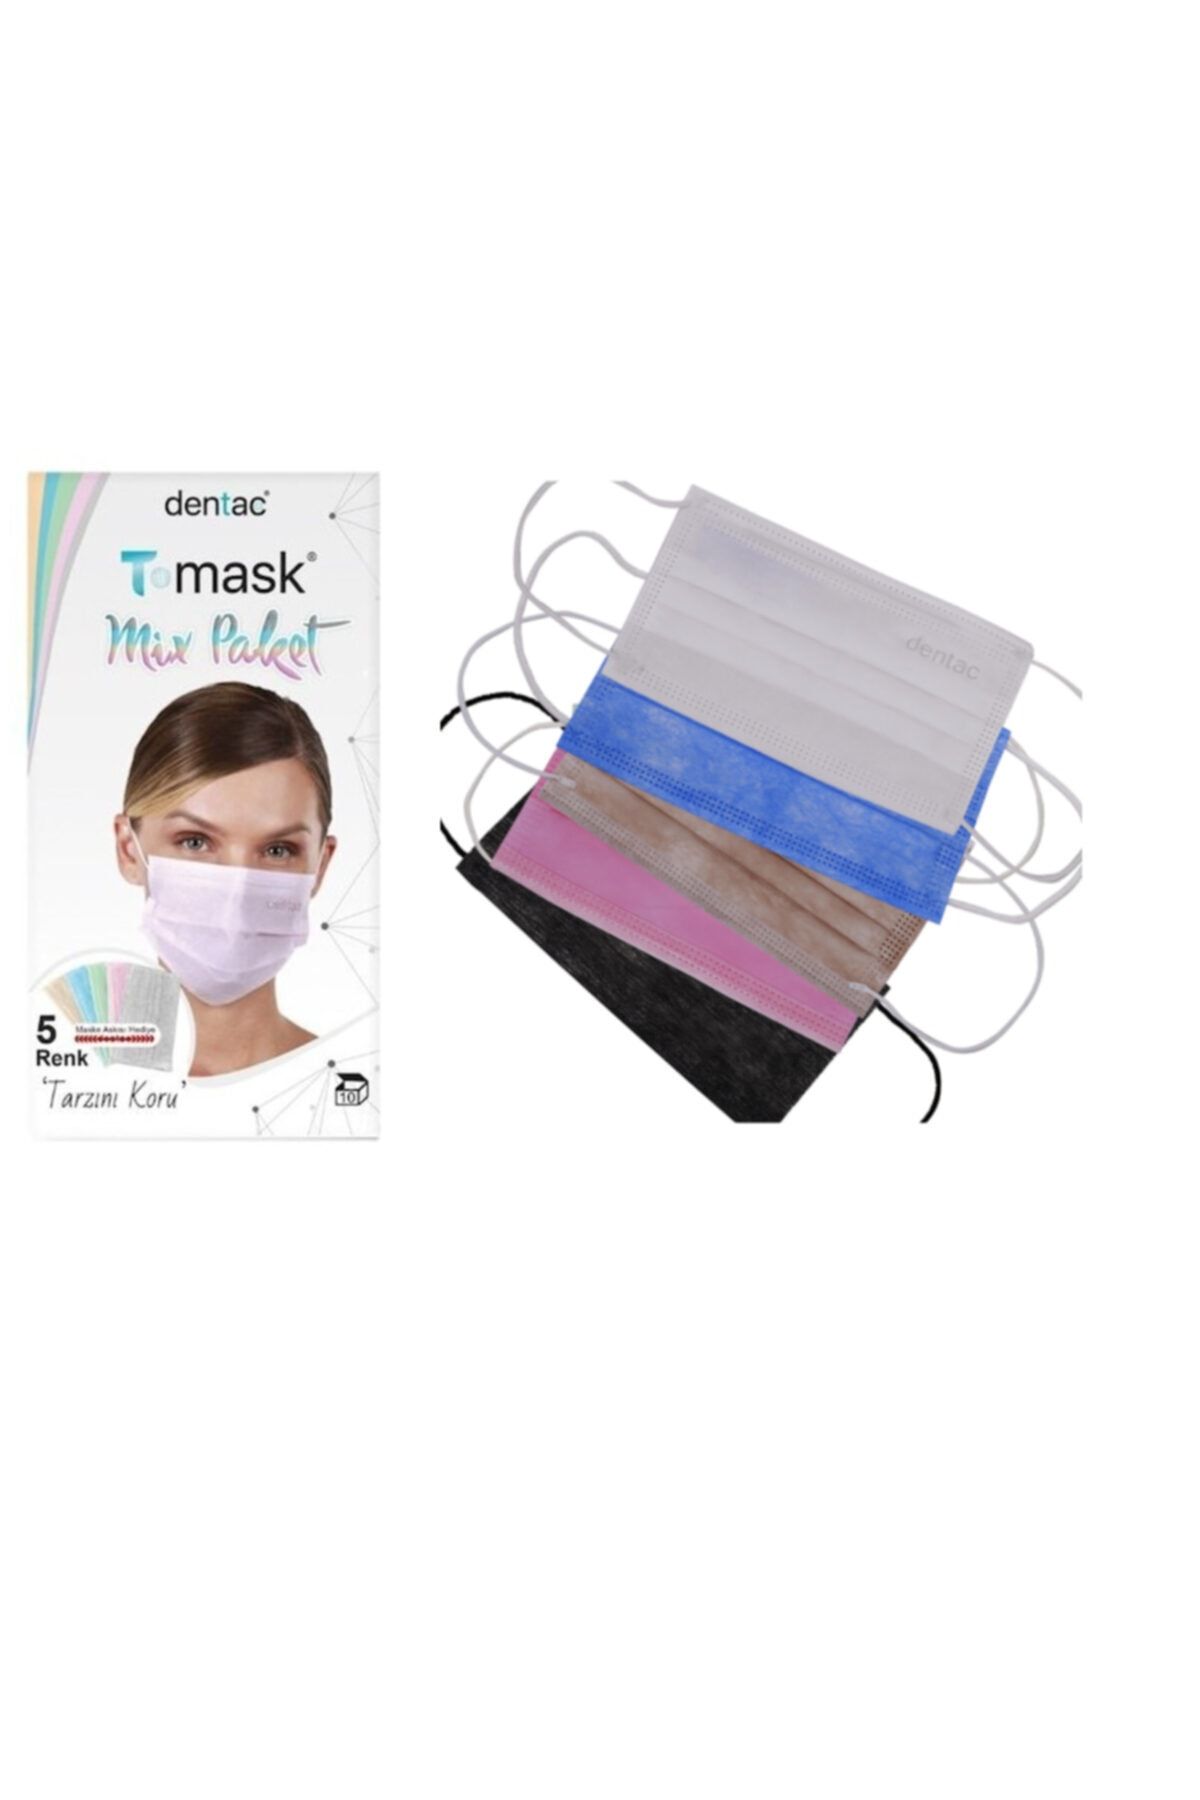 Dentac T-mask 3 Katlı Renkli Mix Paket Yüz Maskesi 1 Kutu (5 Renk 10 Adet)